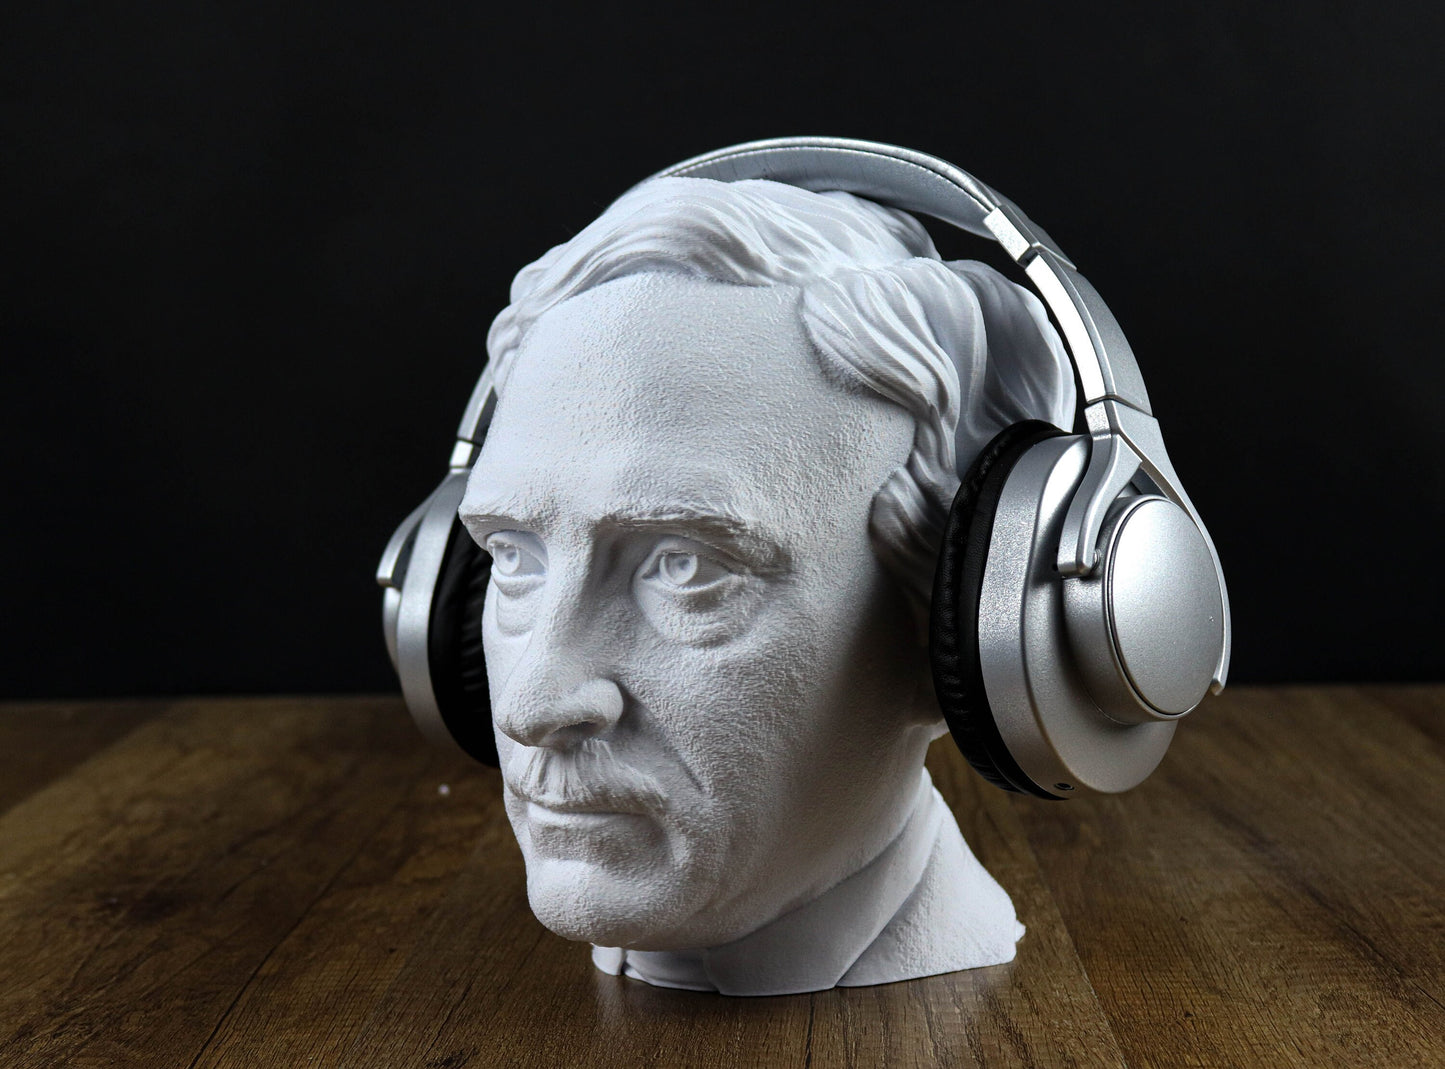 Edgar Allan Poe Bust, Headphone Holder Decoration of the American Writer, Poet